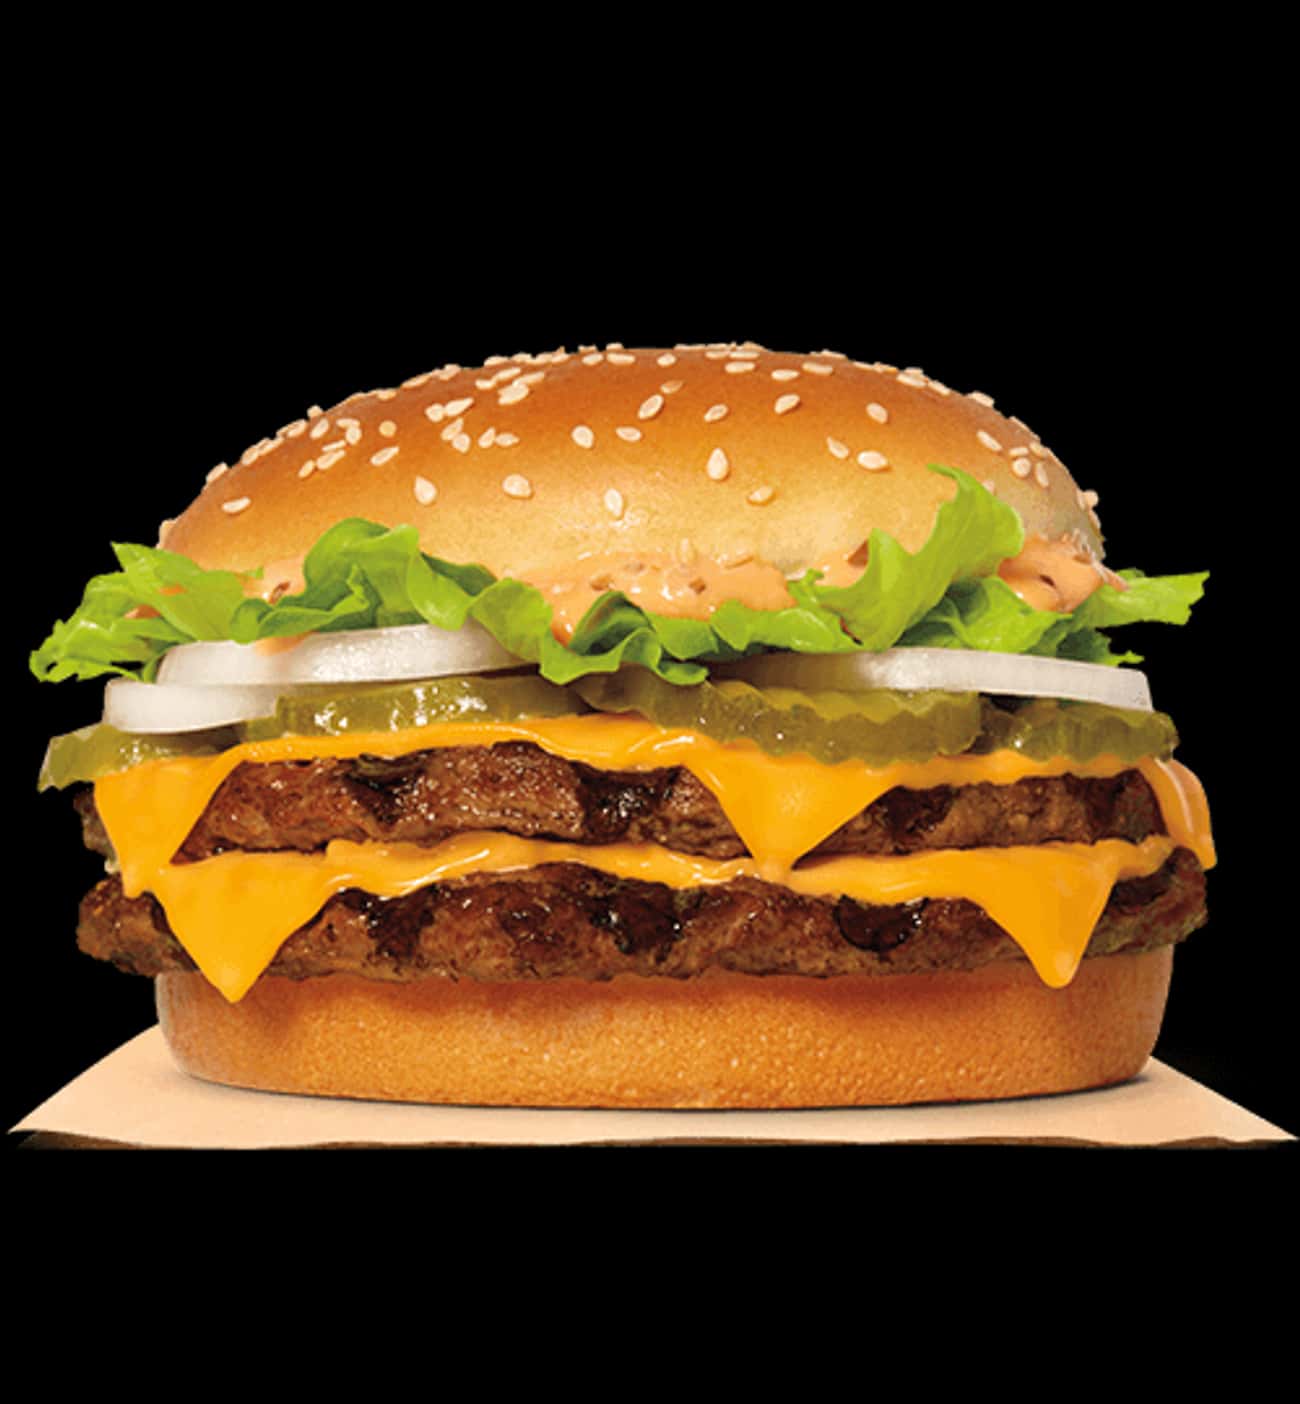 Burger King's Big King XL